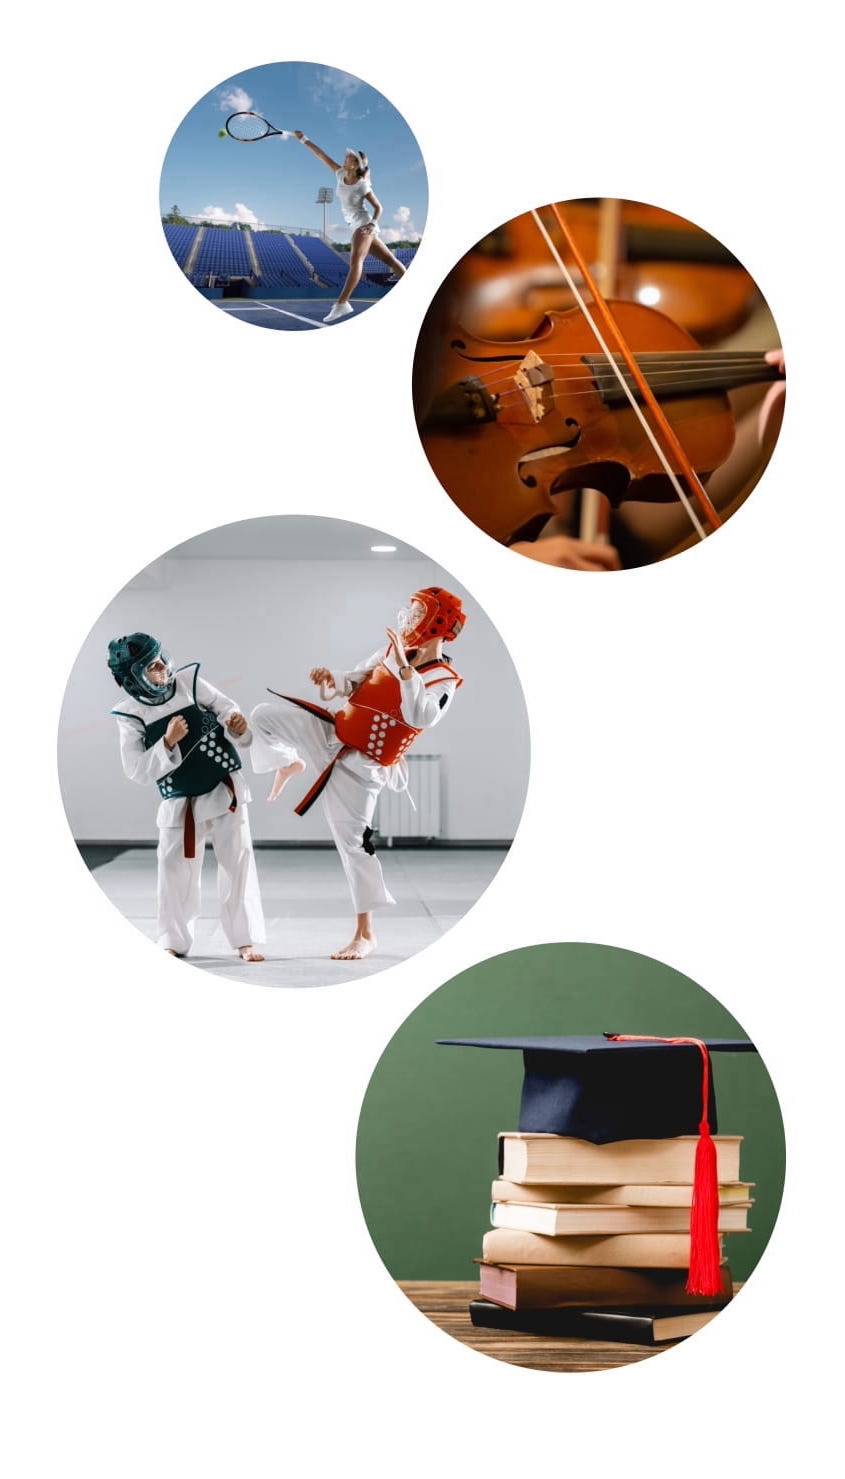 Tennis, violin, taekwondo and academics